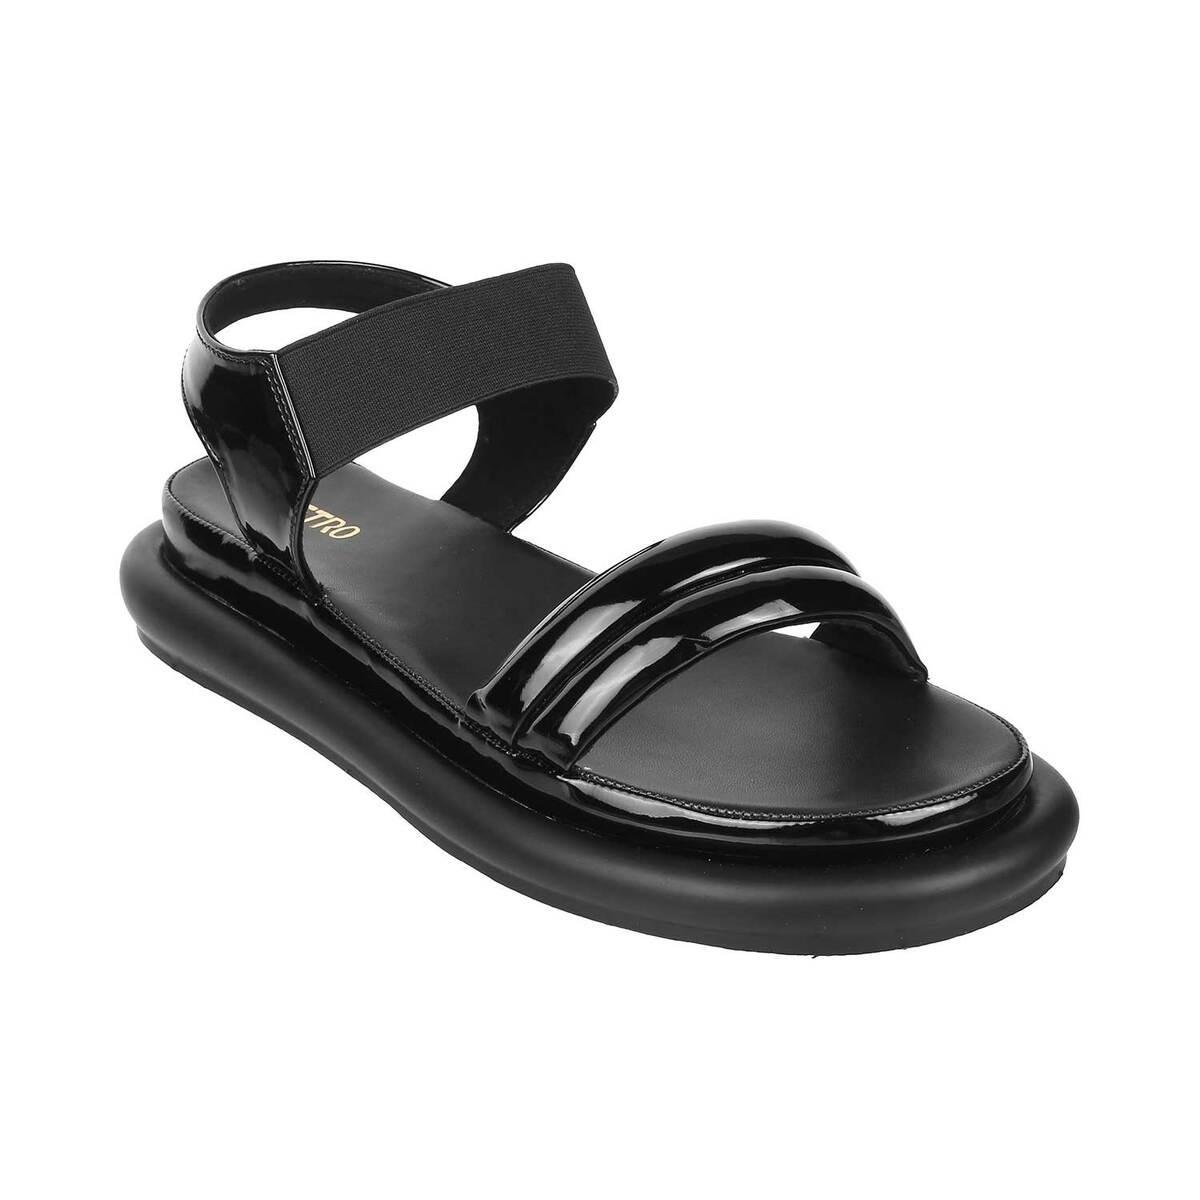 Buy Women Black Casual Sandals Online | SKU: 41-108-11-36-Metro Shoes